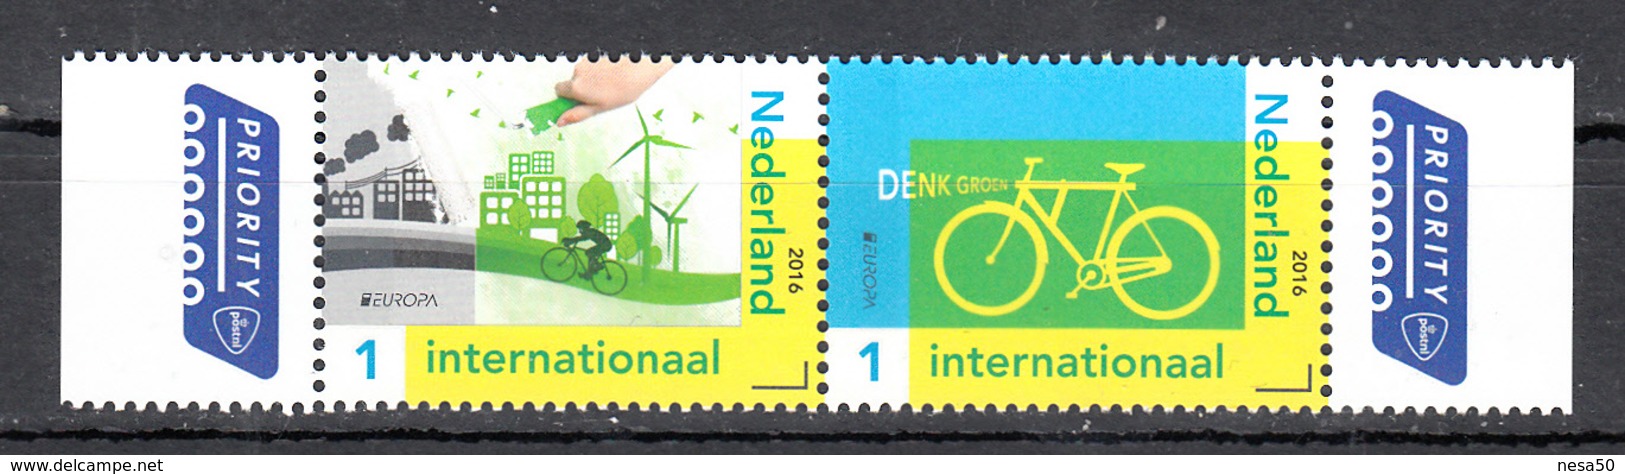 Nederland 2016 Nvph Nr 3399 + 3400, Mi Nr 3457 + 3458 ; Denk Groen; Europa; Fiets, Bike Postfris - Nuevos